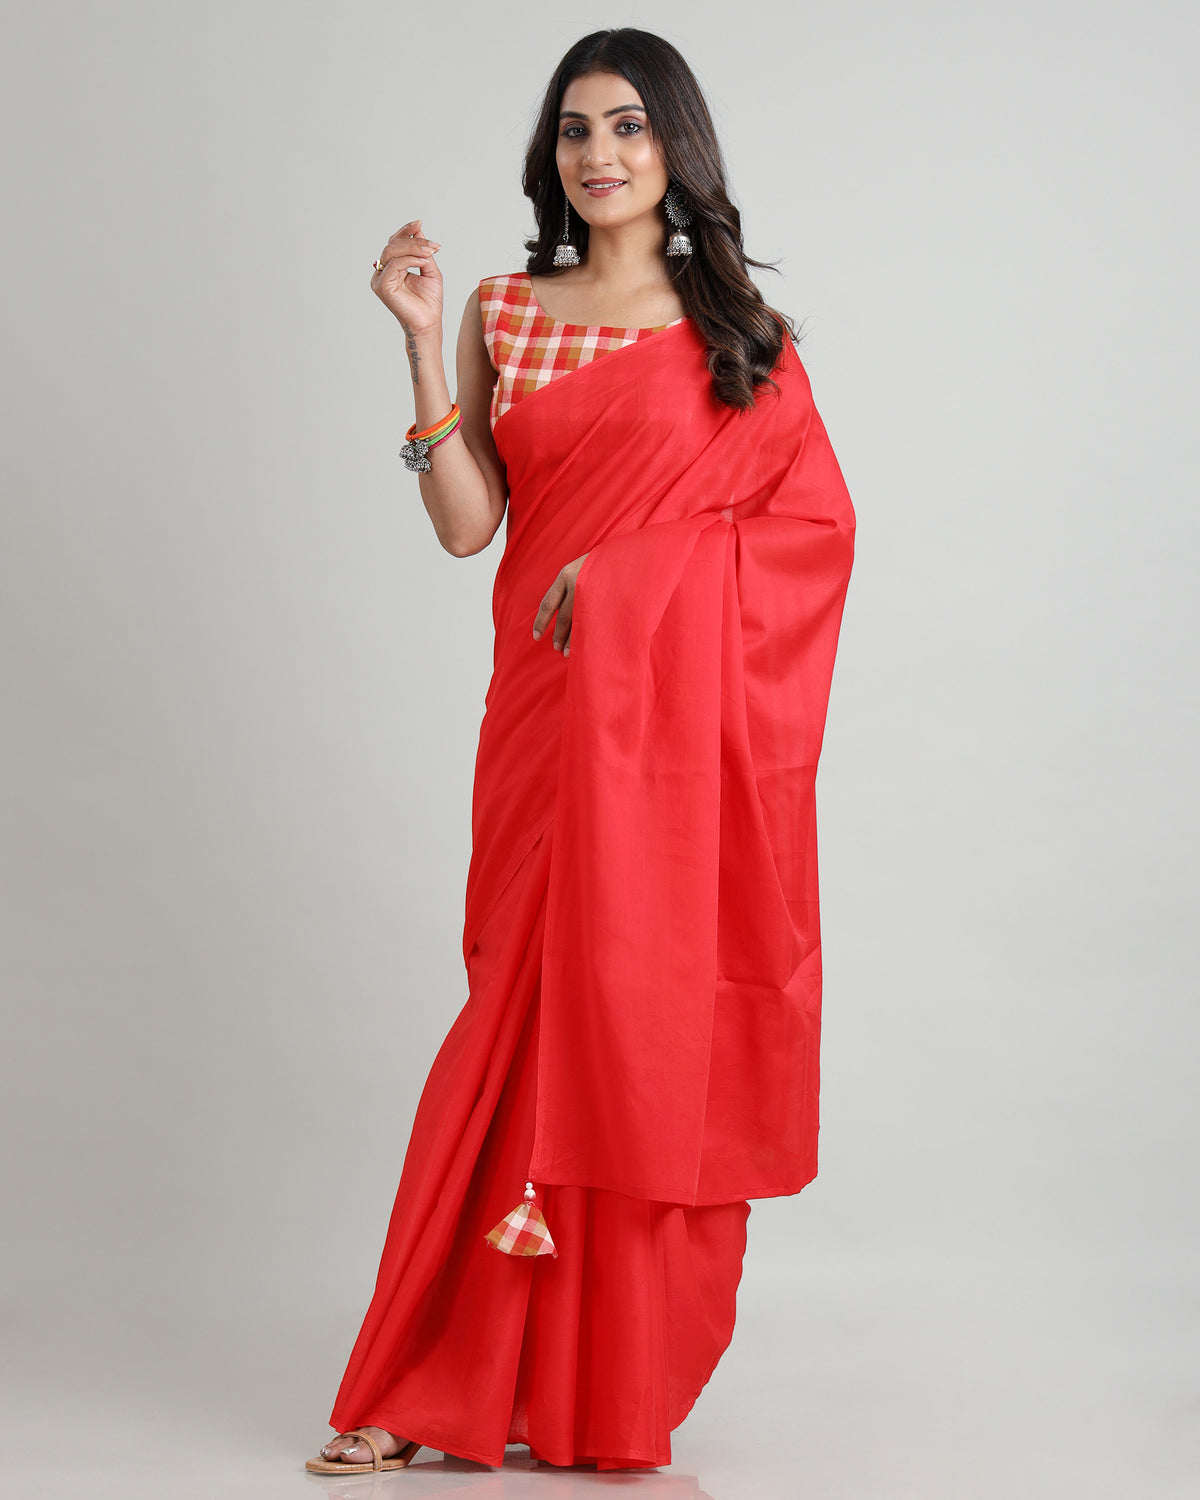 Classic Confidence: The Red Cotton Mulmul Saree